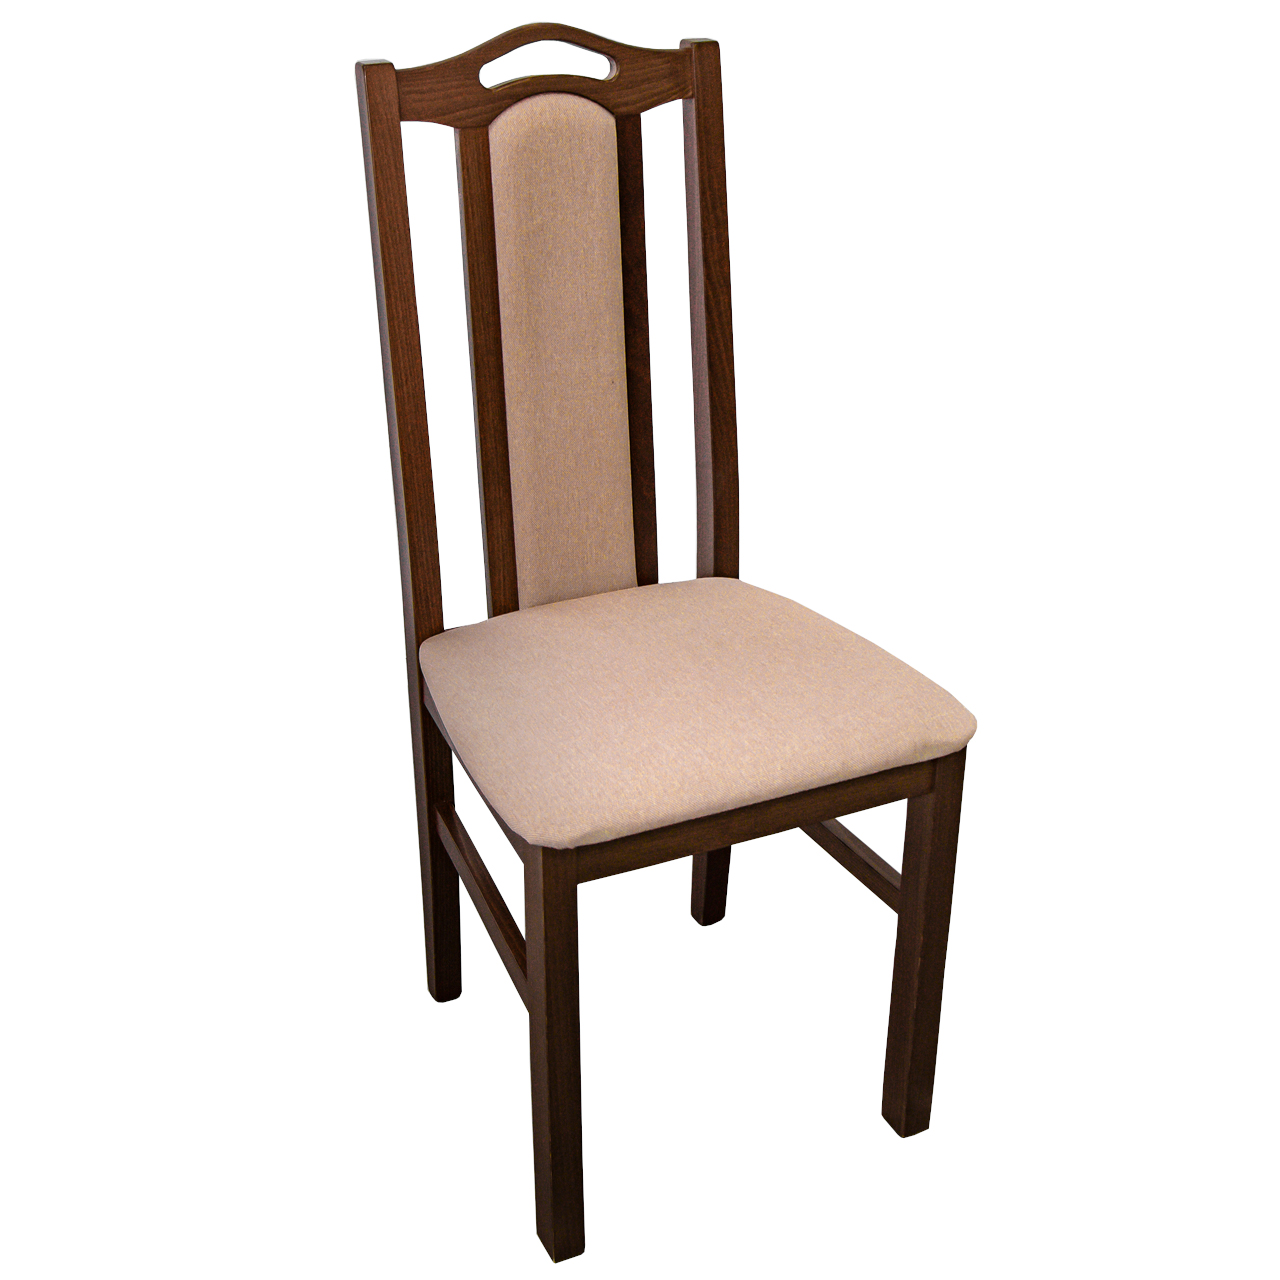 Chair BOS 9 chestnut / 14B